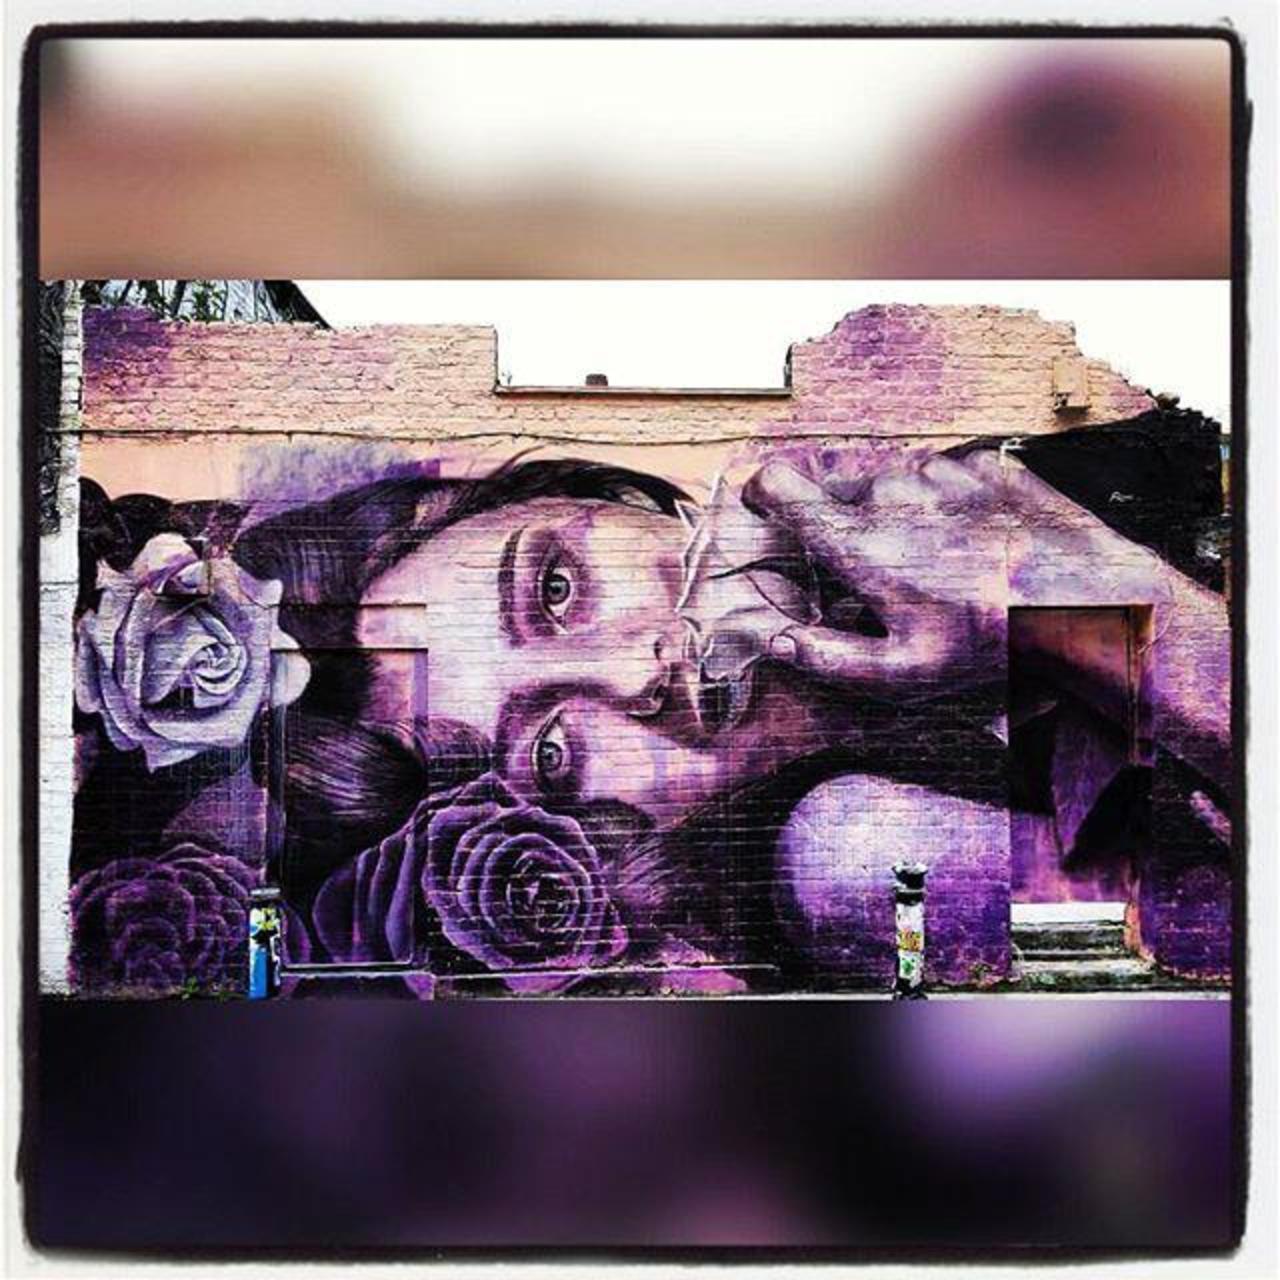 #streetart #london #rone #girl #purple #rose #england #londonstreetart #street #art #streetartlondon #graffiti http://t.co/G26cNg2KxE